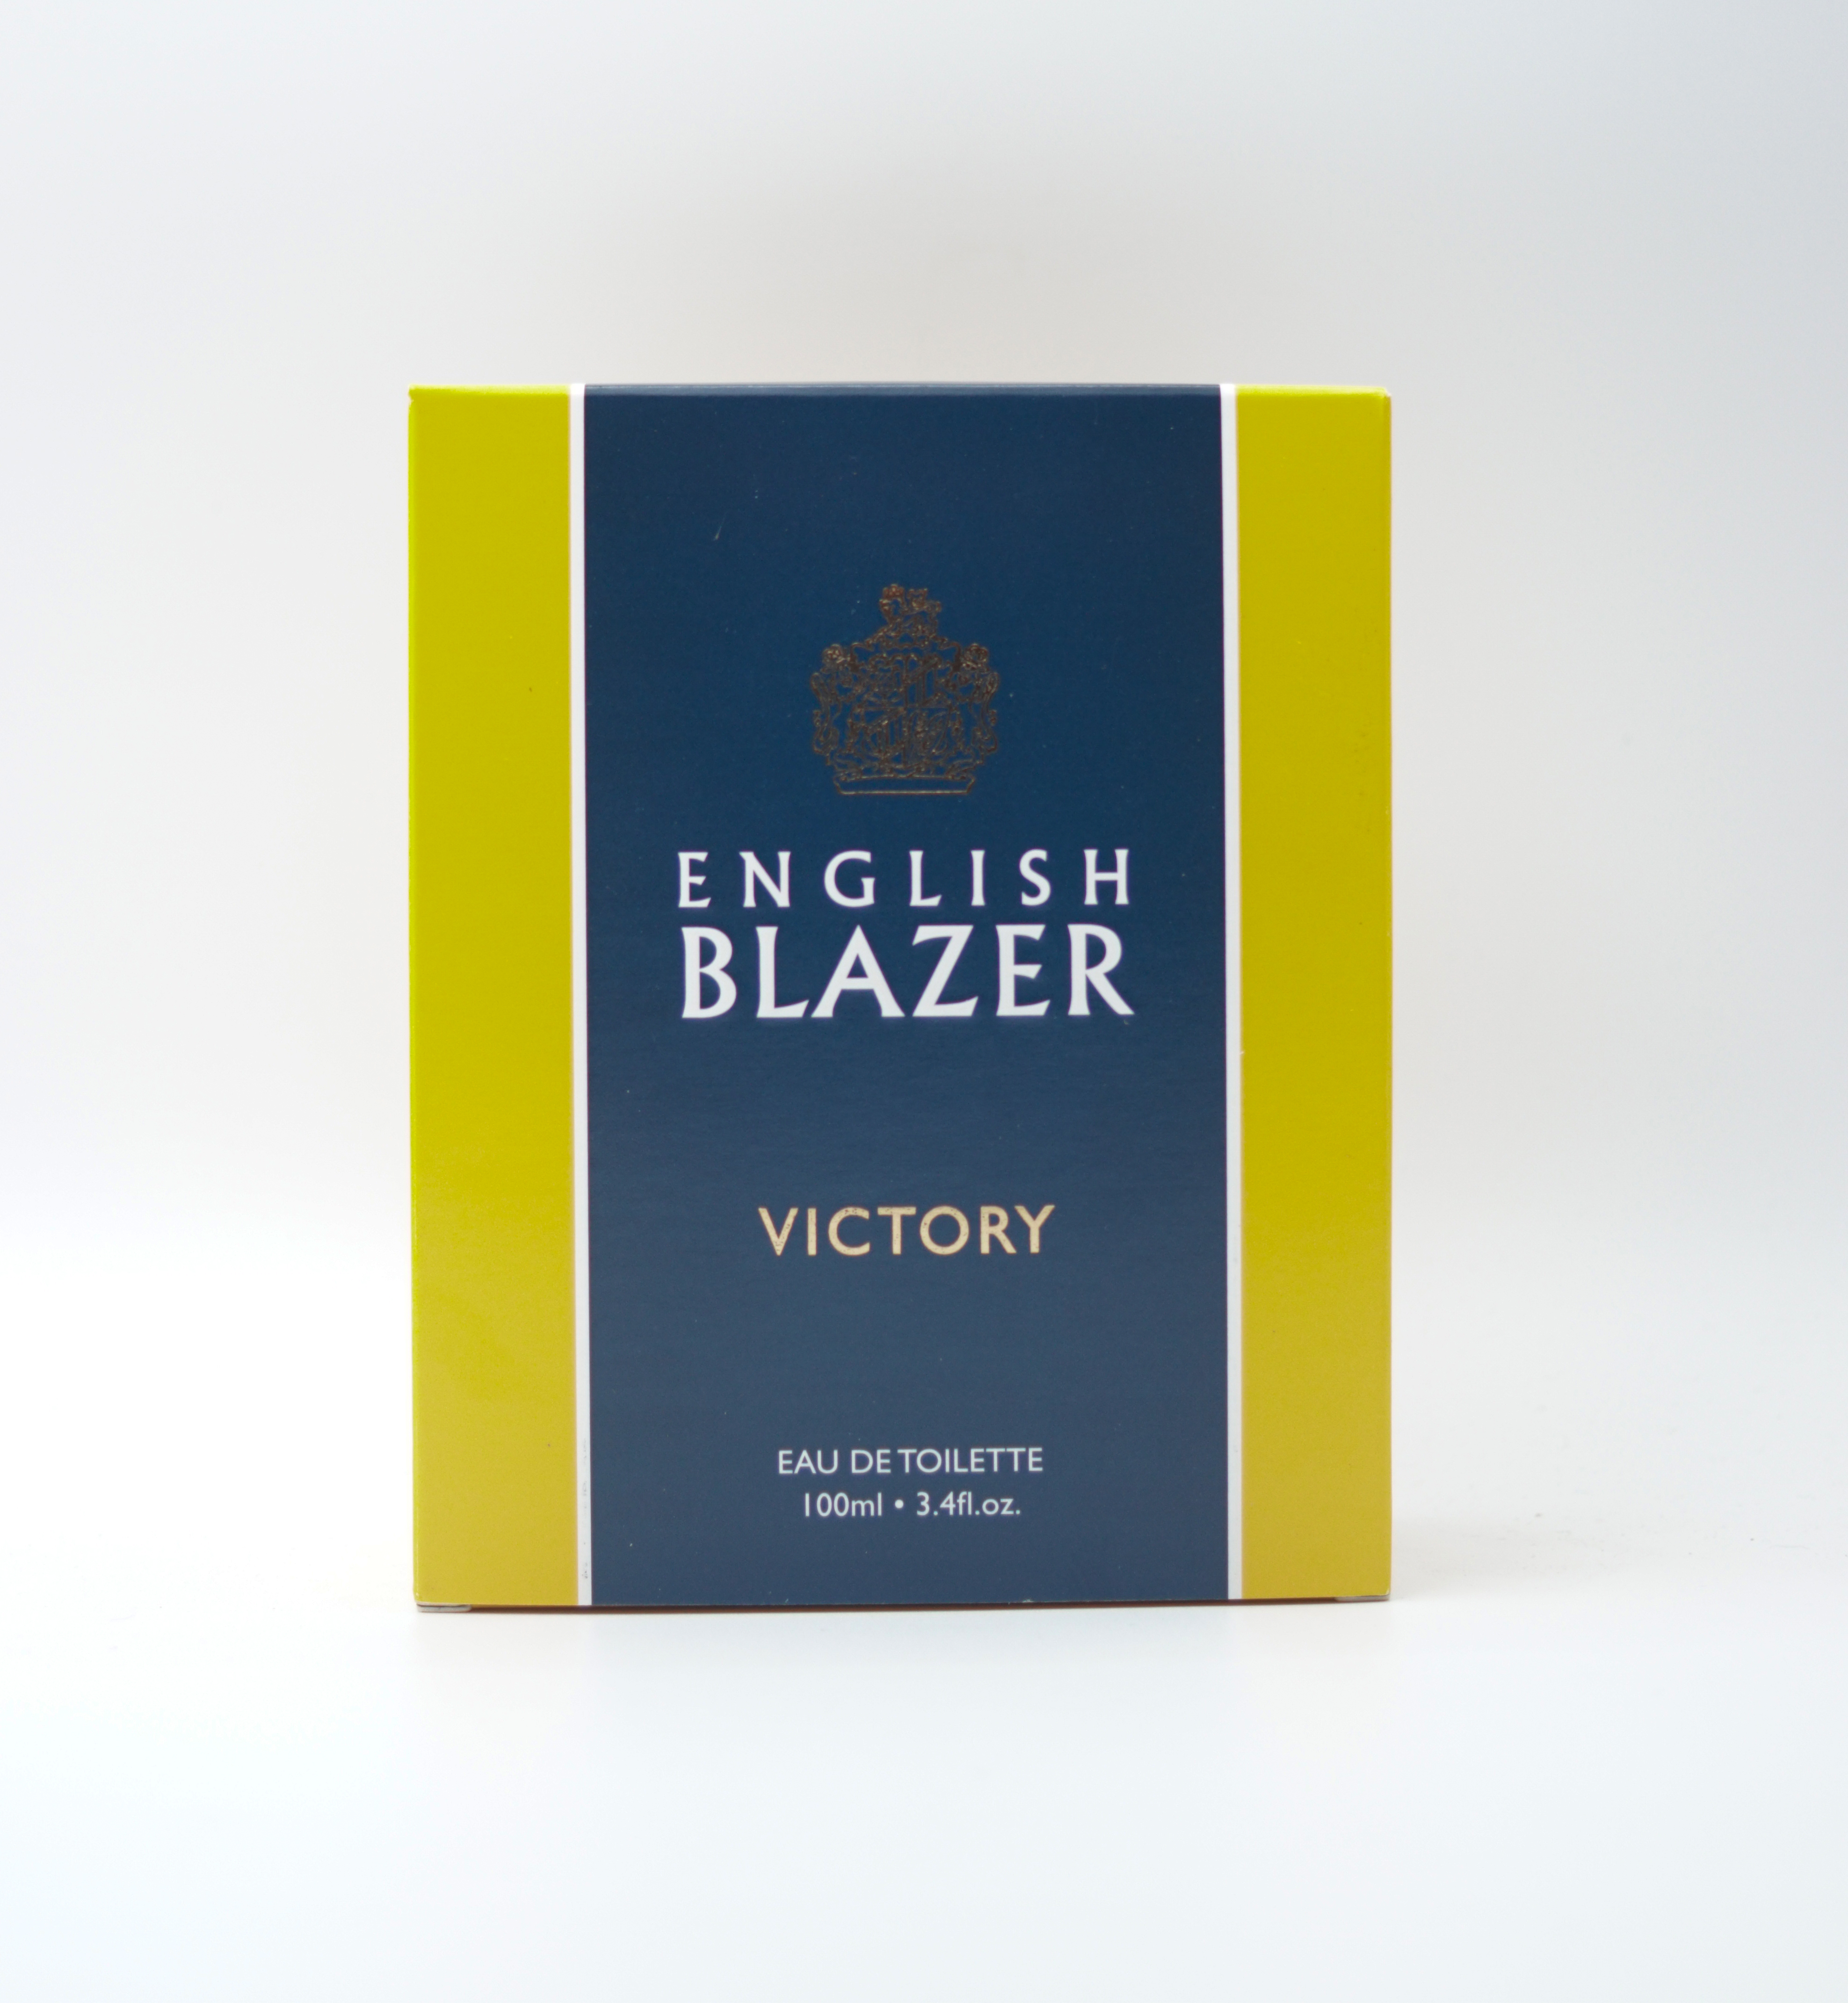 English Blazer Victory 100 ml Eau de Toilette Perfume SKU 96852